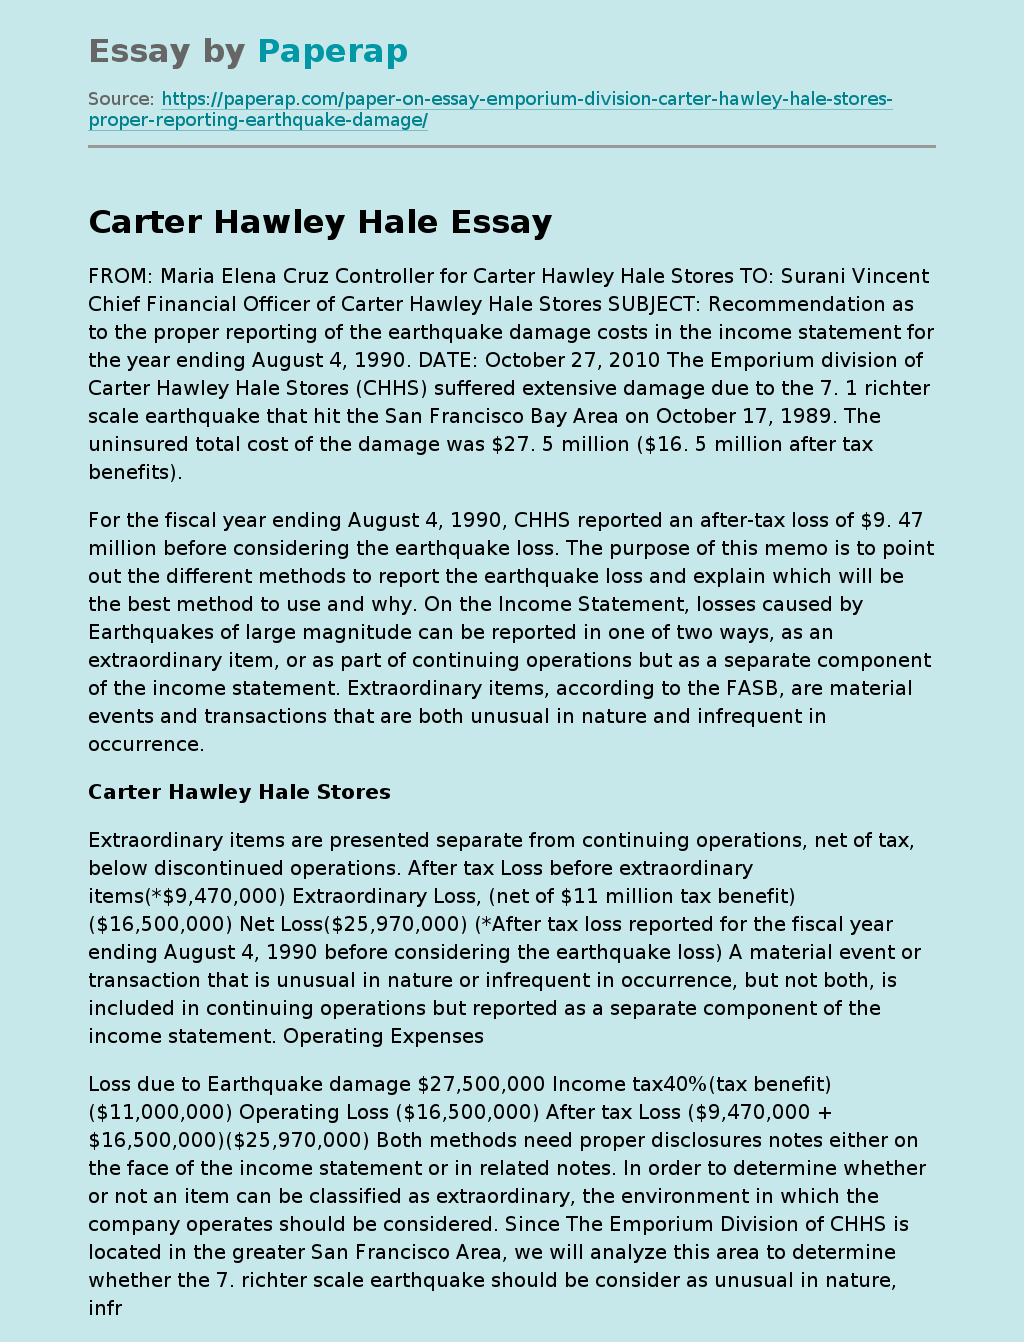 Carter Hawley Hale